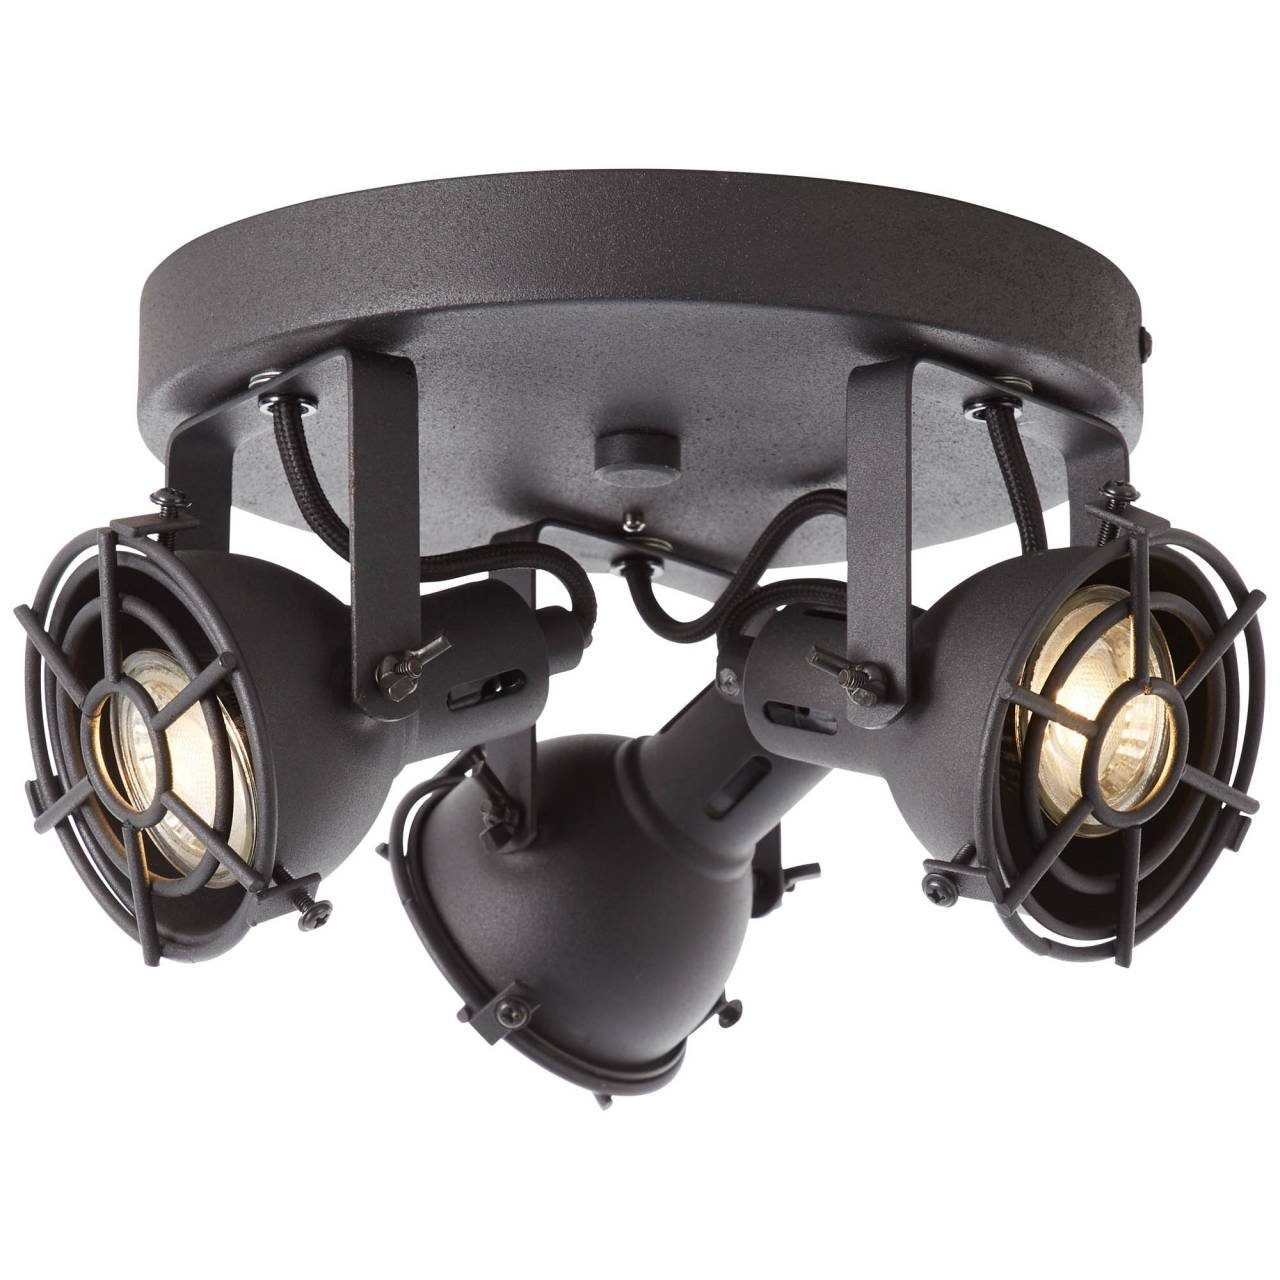 3x schwarz Spotrondell Jesper, LED-PAR51, korund Jesper GU10 Deckenleuchte 3000K, Brilliant Lampe 3flg LED